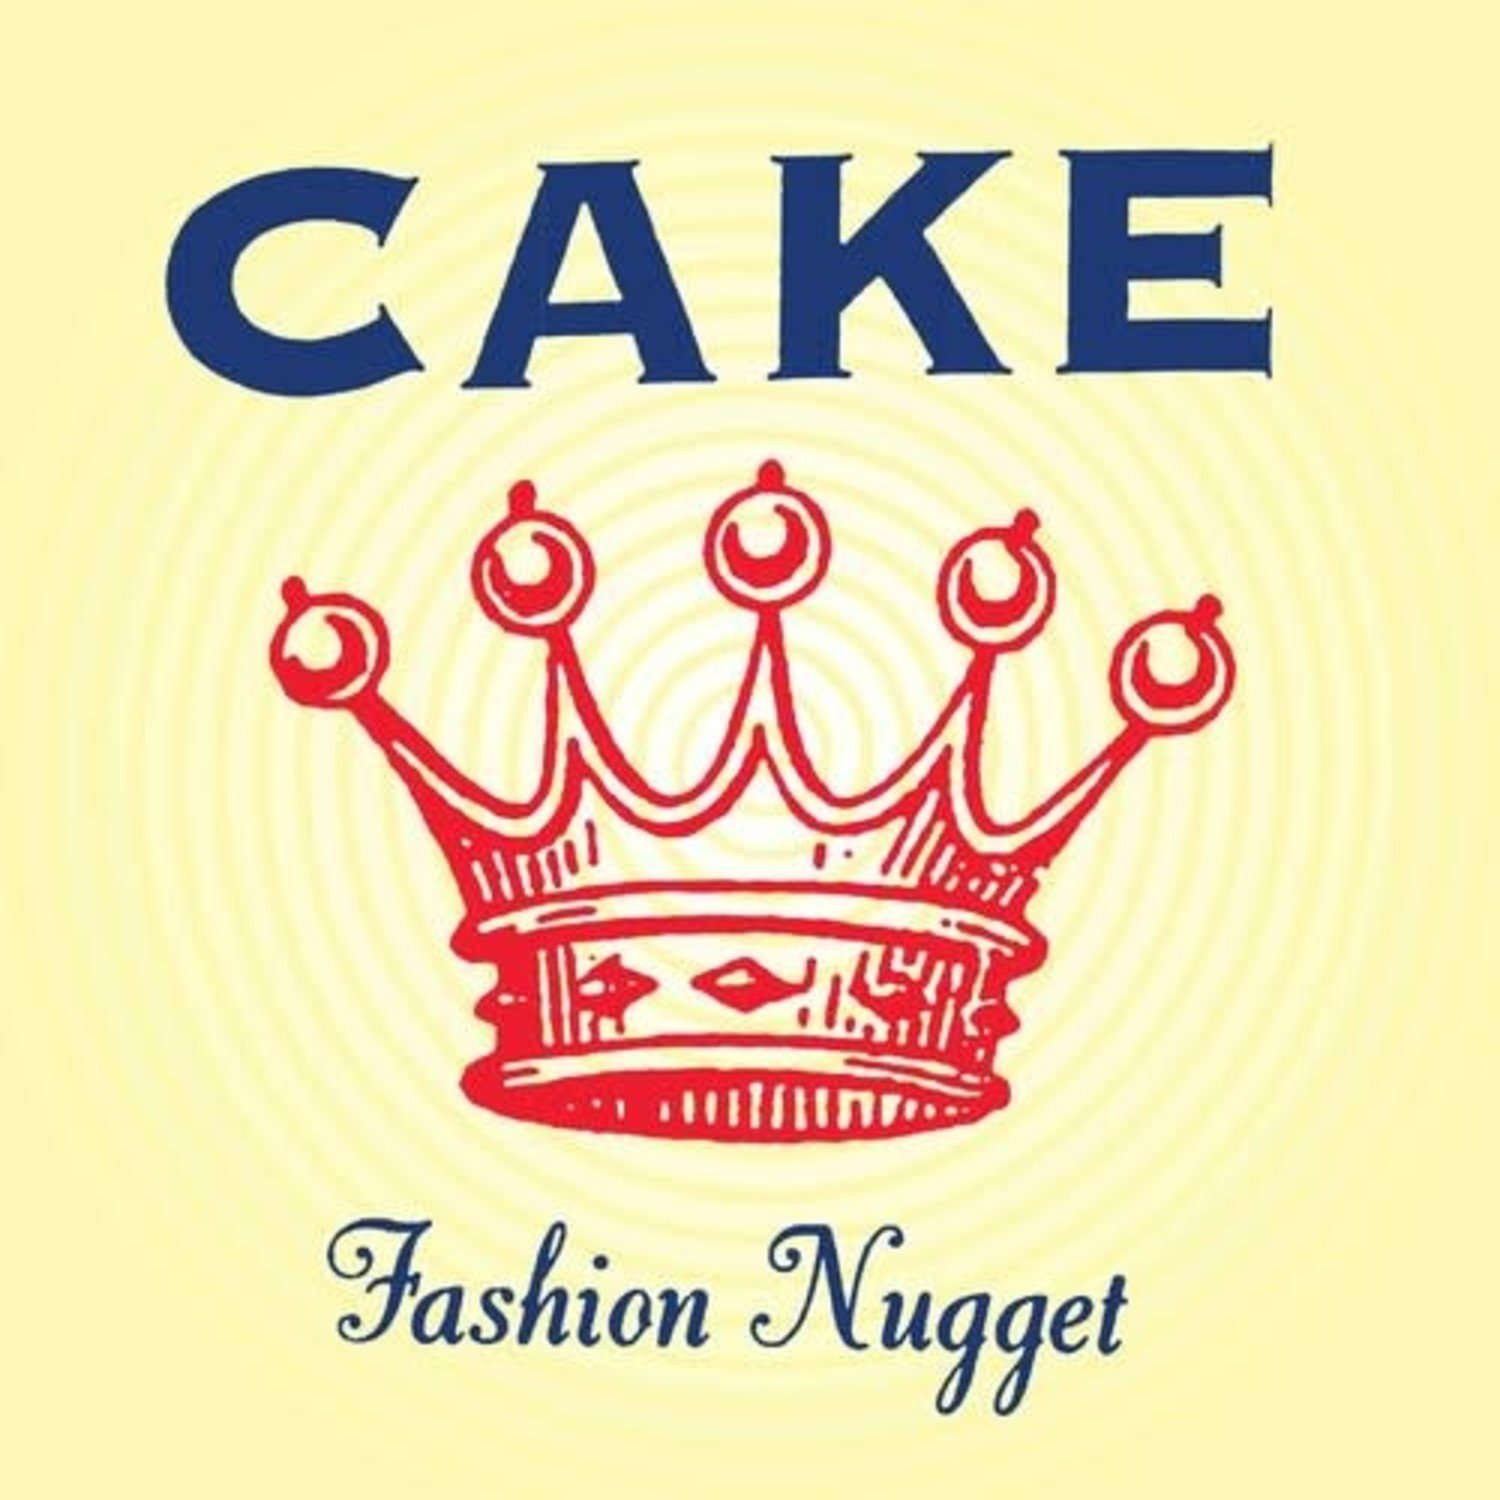 Cake - Fashion Nugget LP (180g) - Wax Trax Records